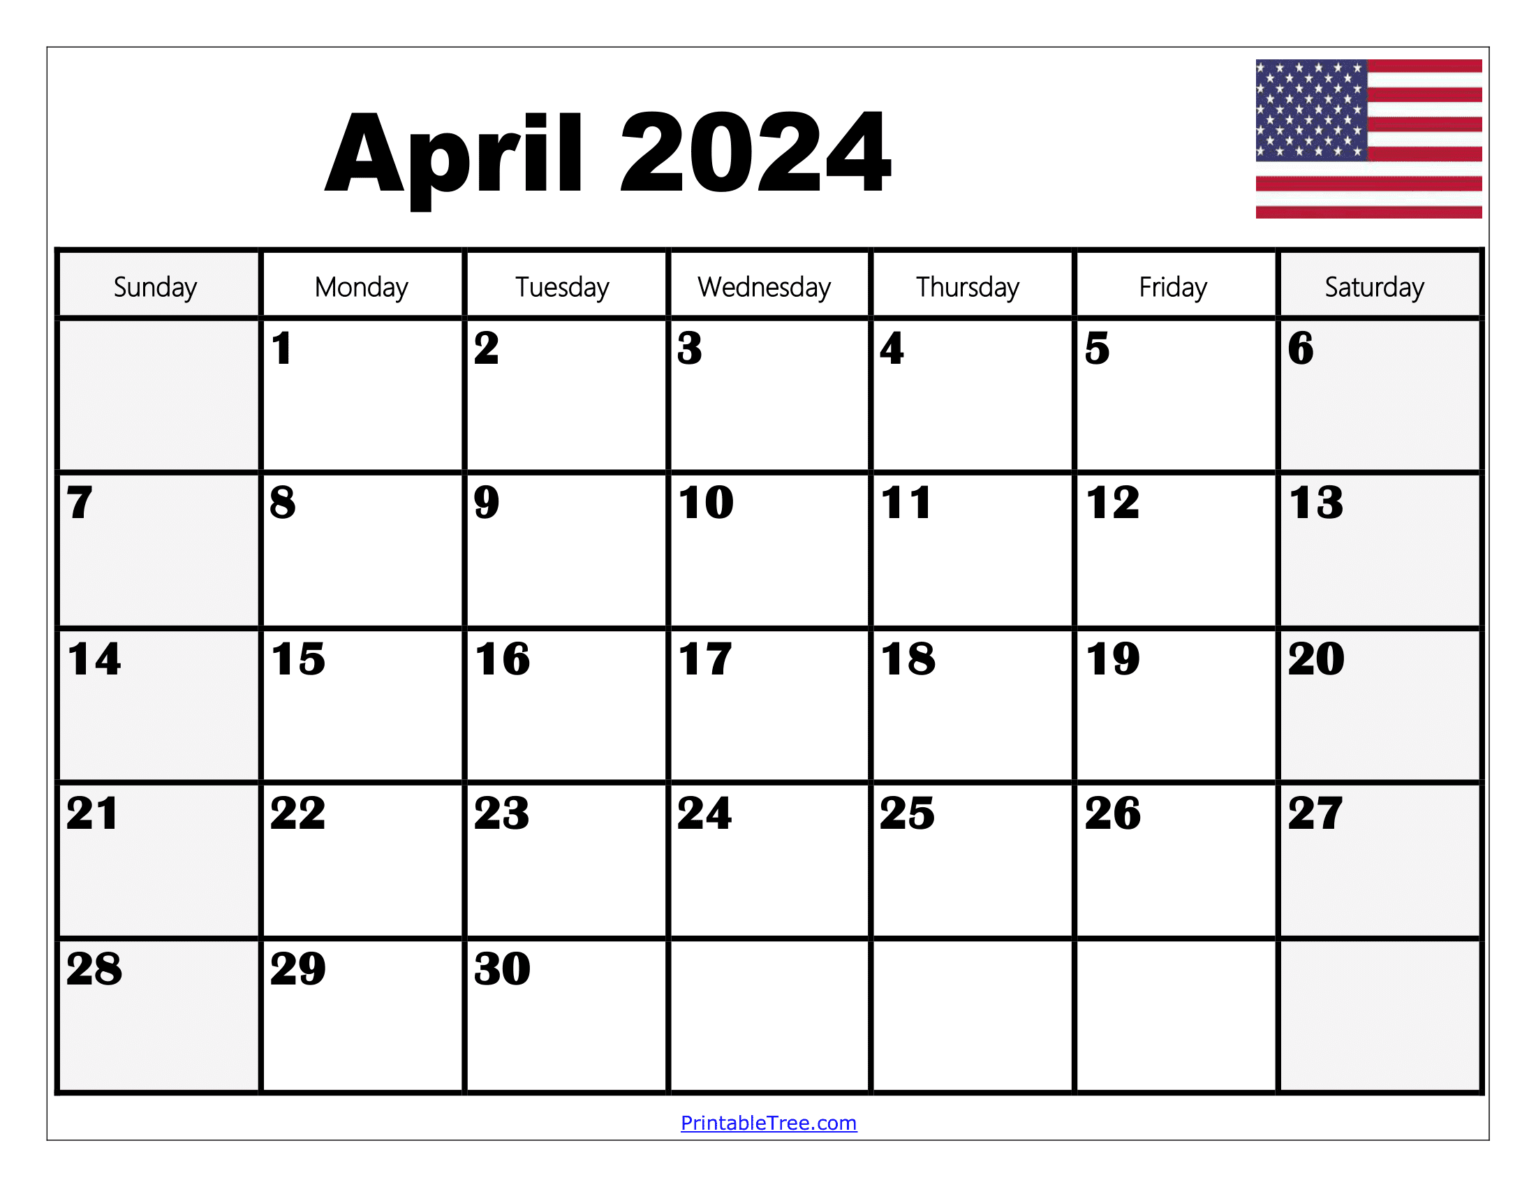 Current Events In April 2024 Sammy Cherrita